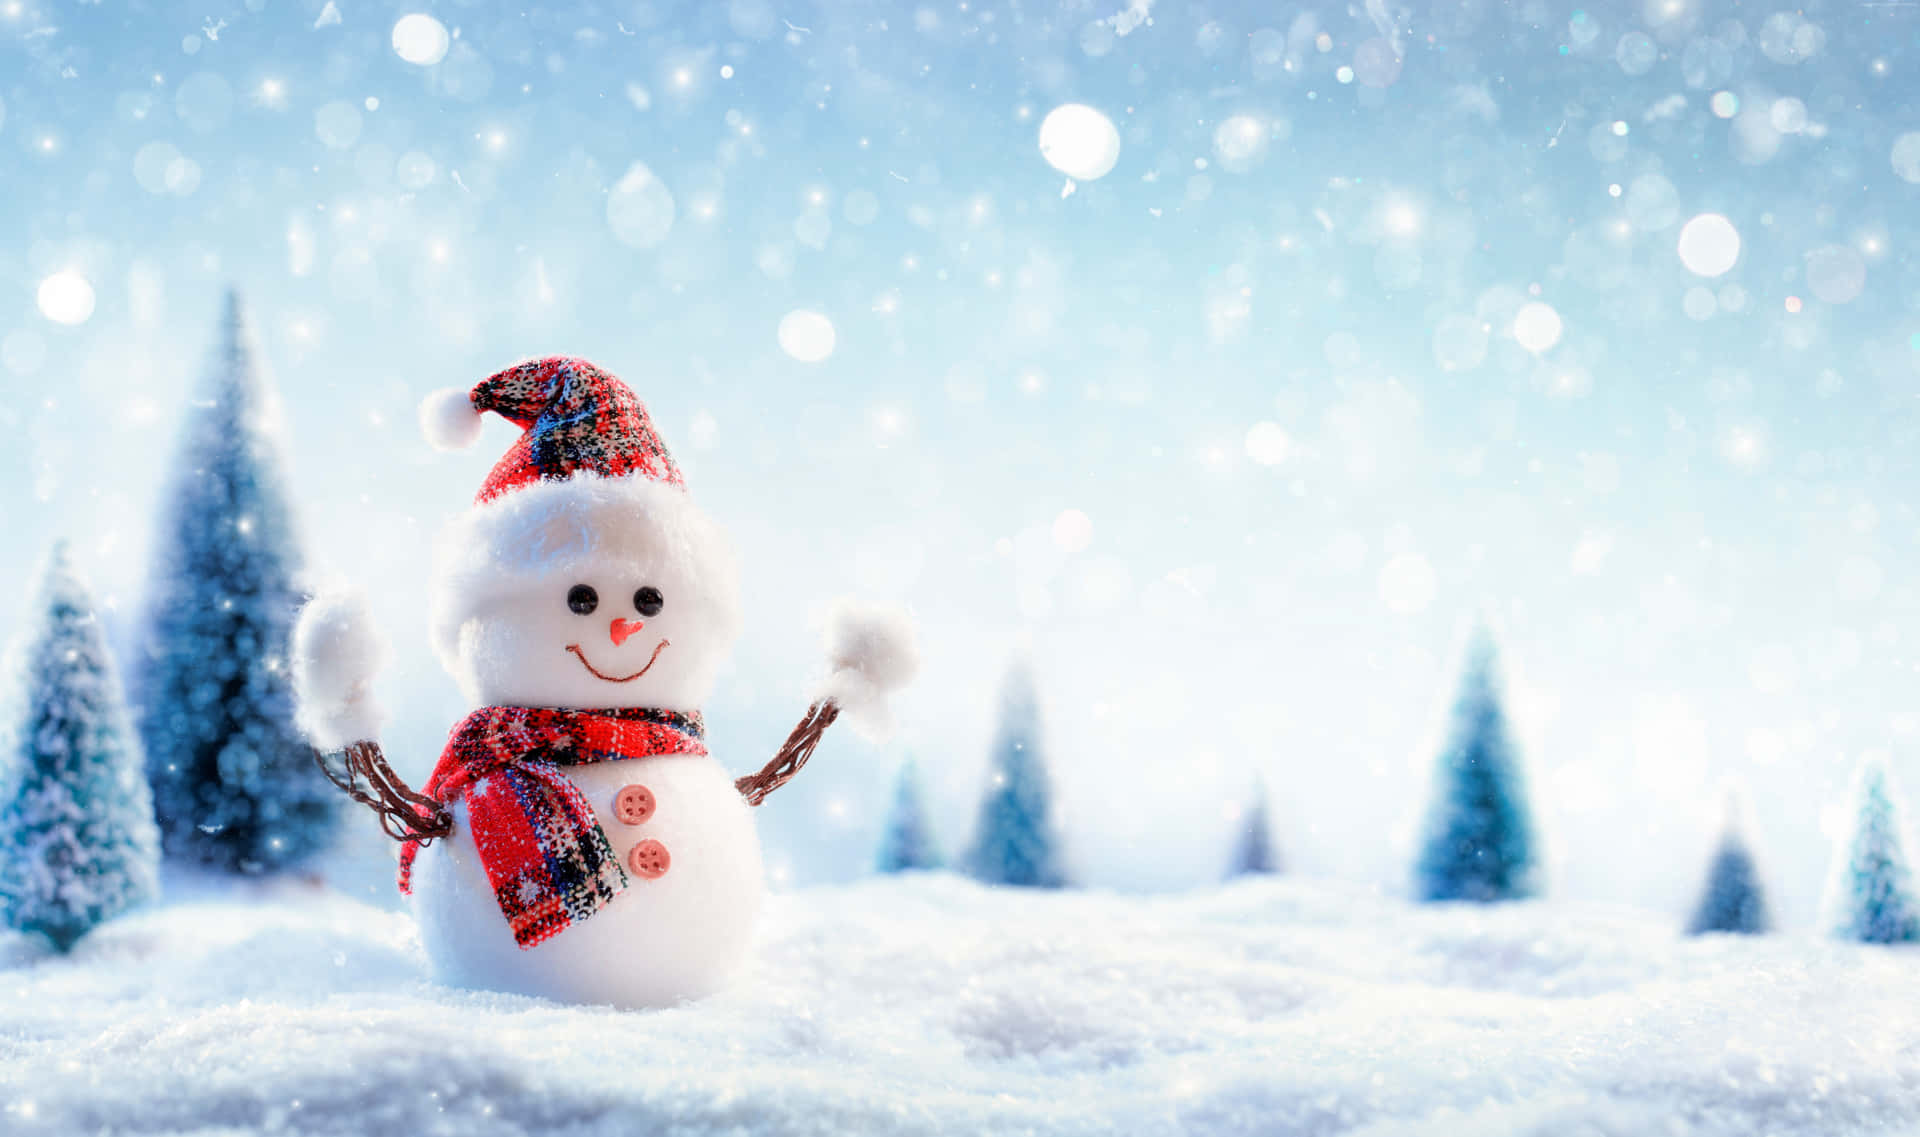 Adorable Snowman in the Winter Wonderland